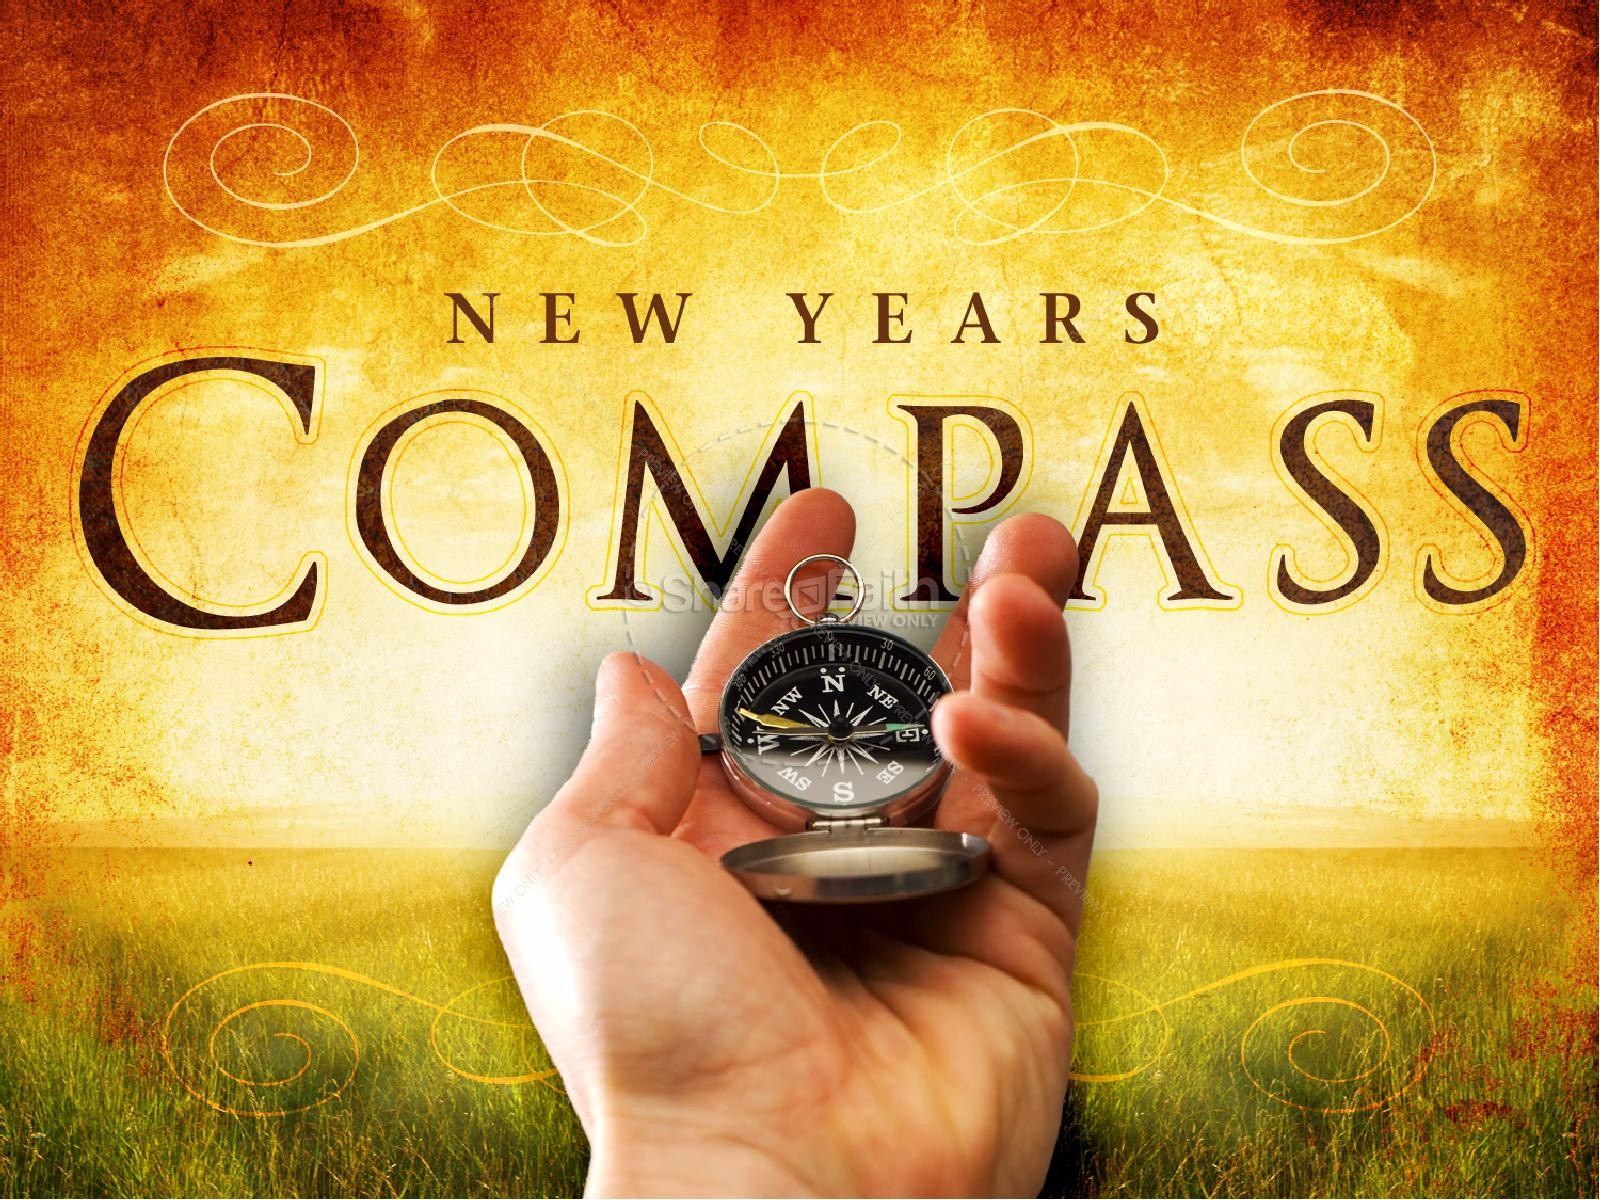 New Years Compass PowerPoint Sermon Thumbnail 2